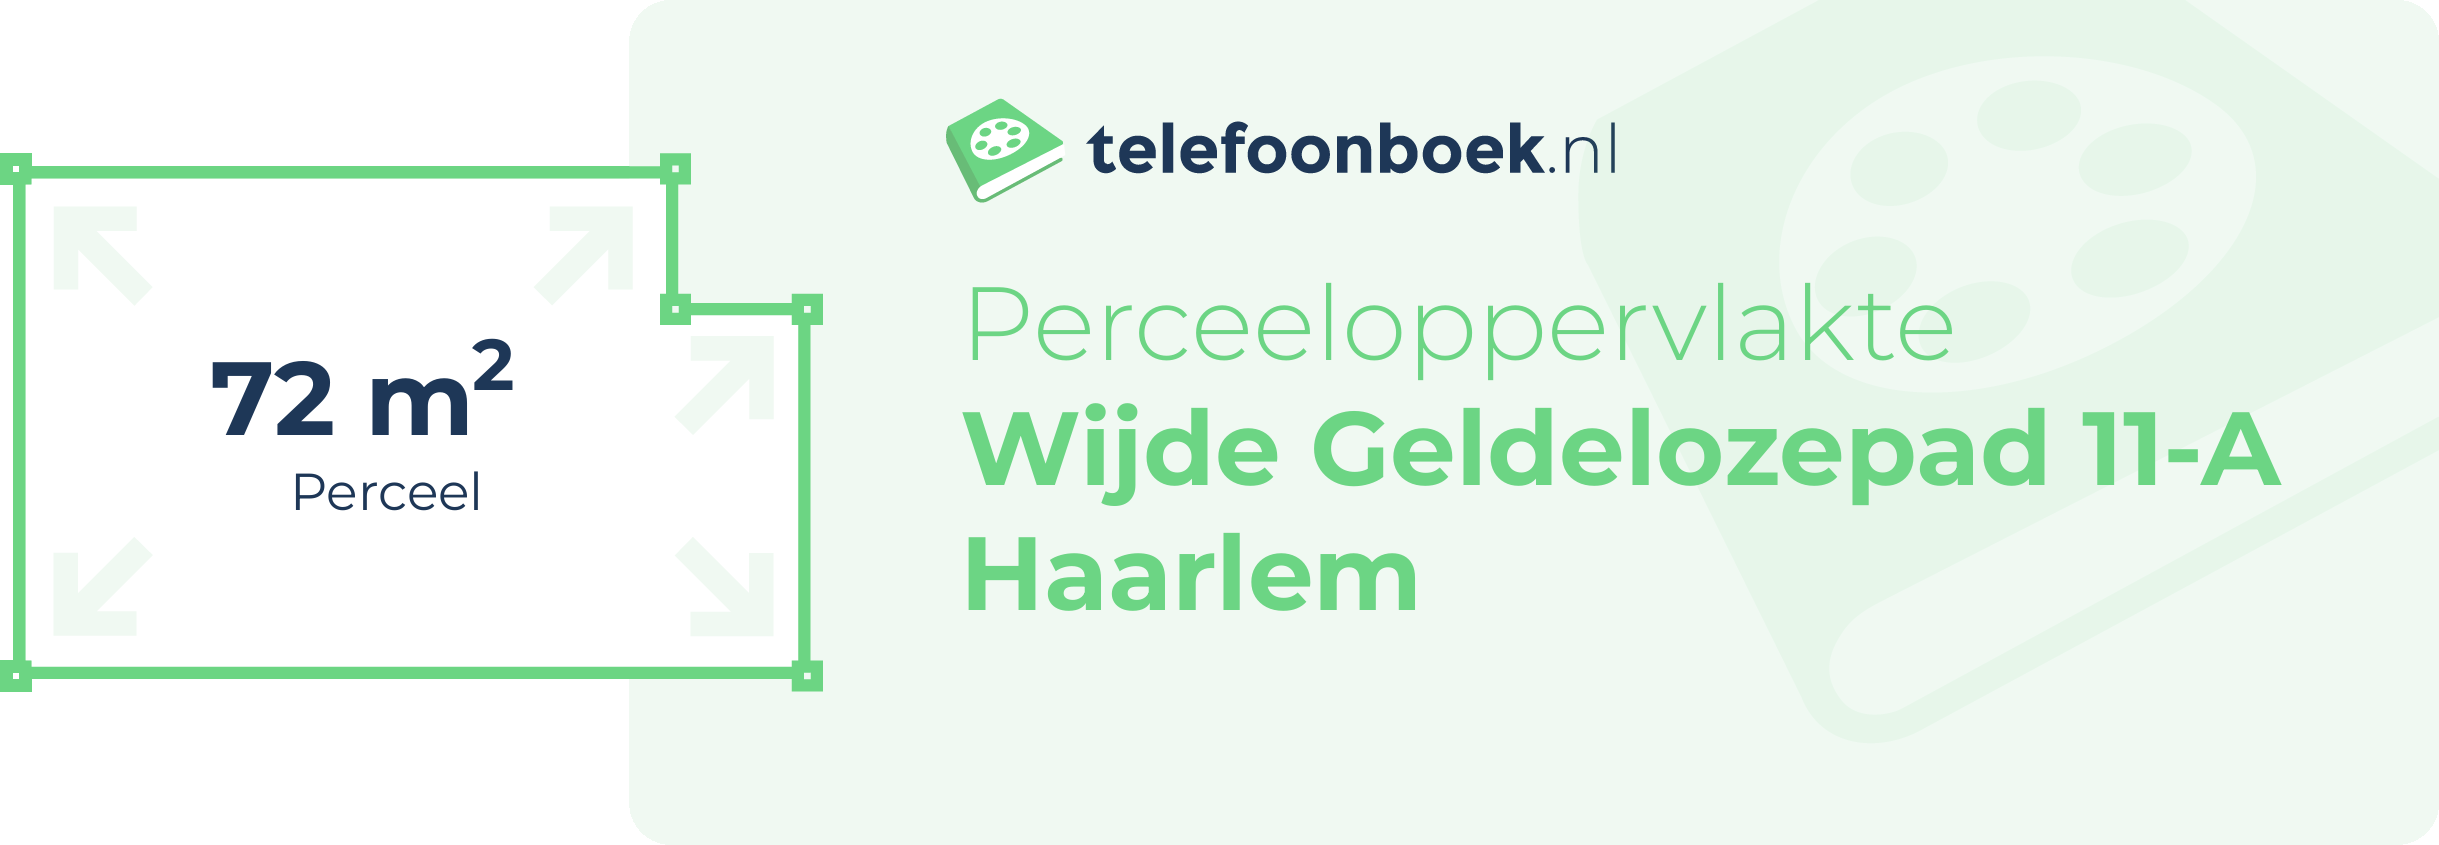 Perceeloppervlakte Wijde Geldelozepad 11-A Haarlem